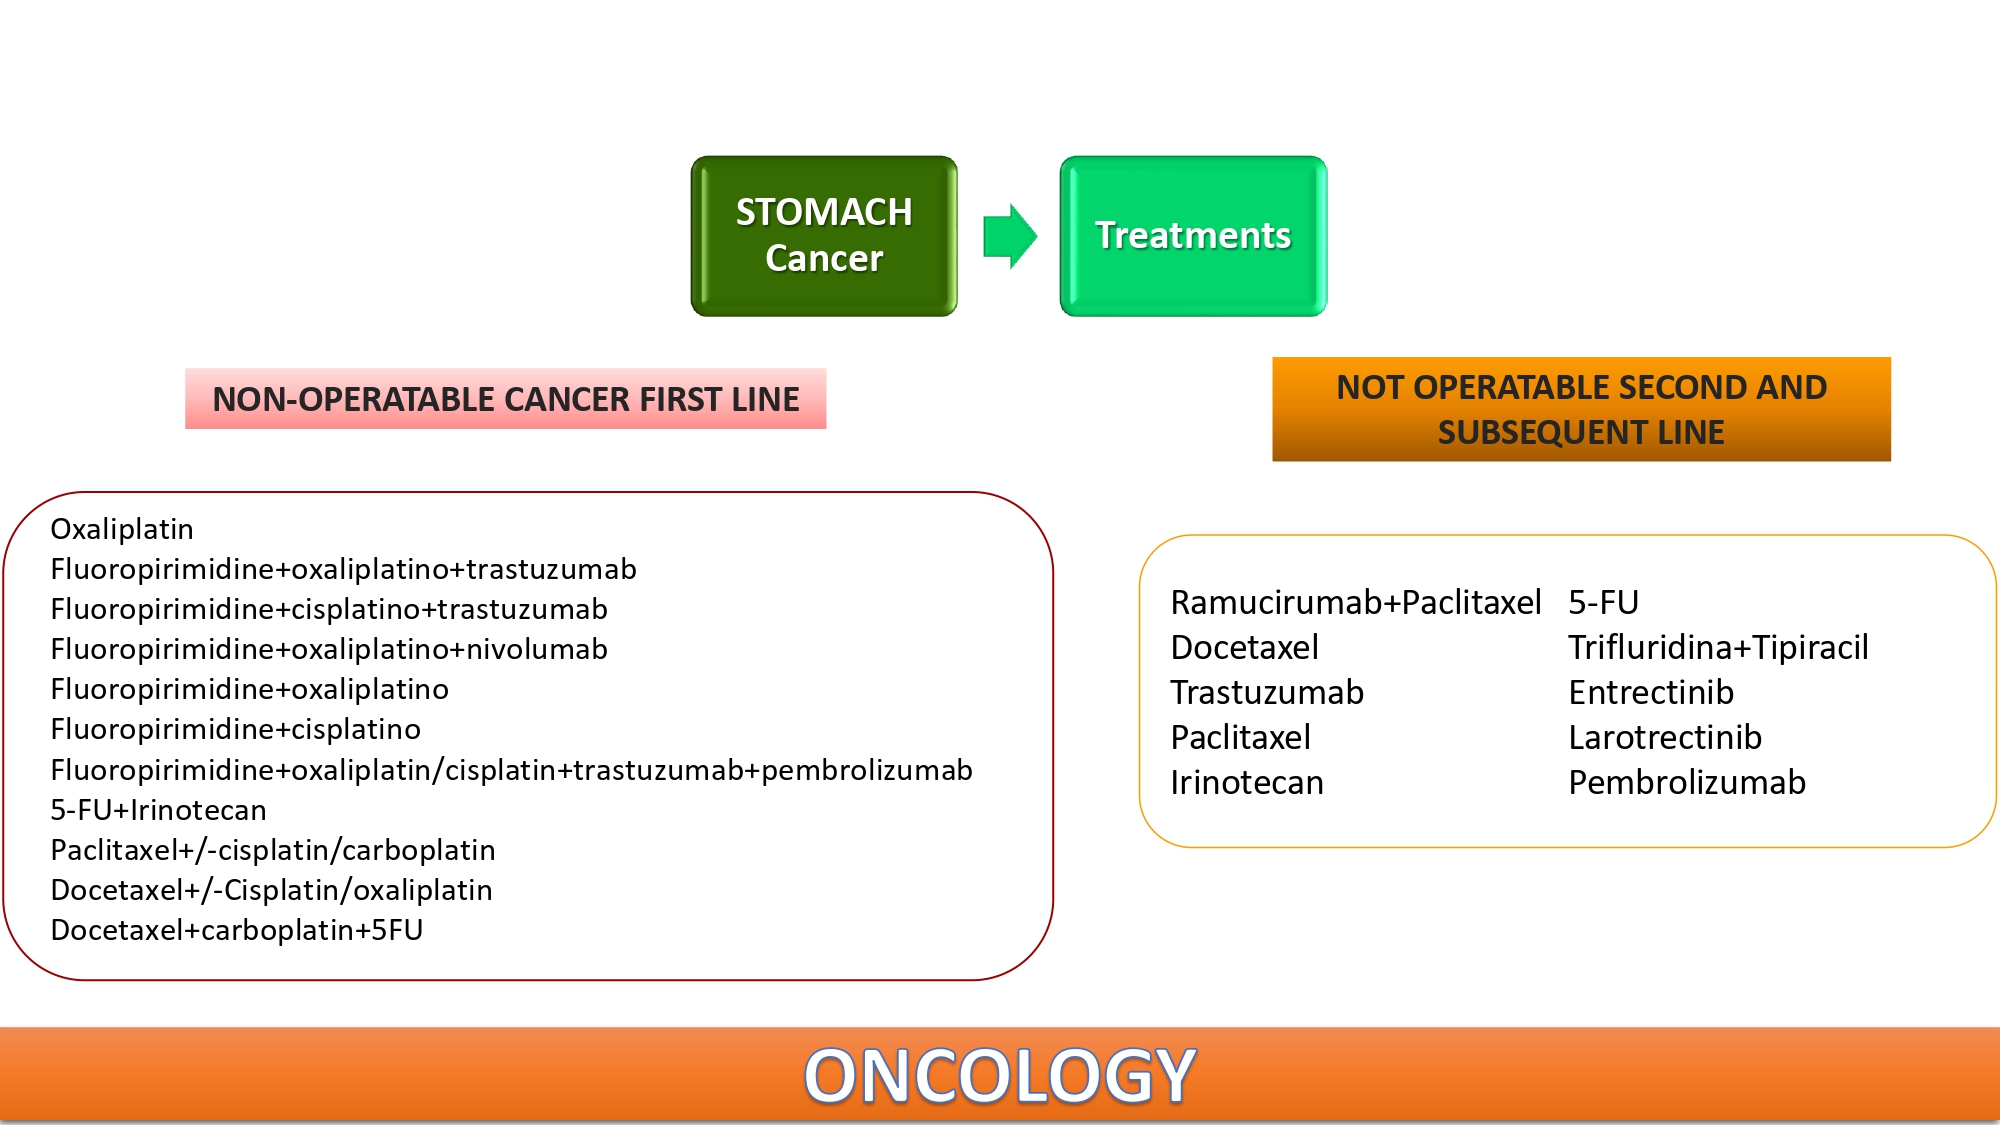 Stomach cancer - Medicql tourism - Turissam Med